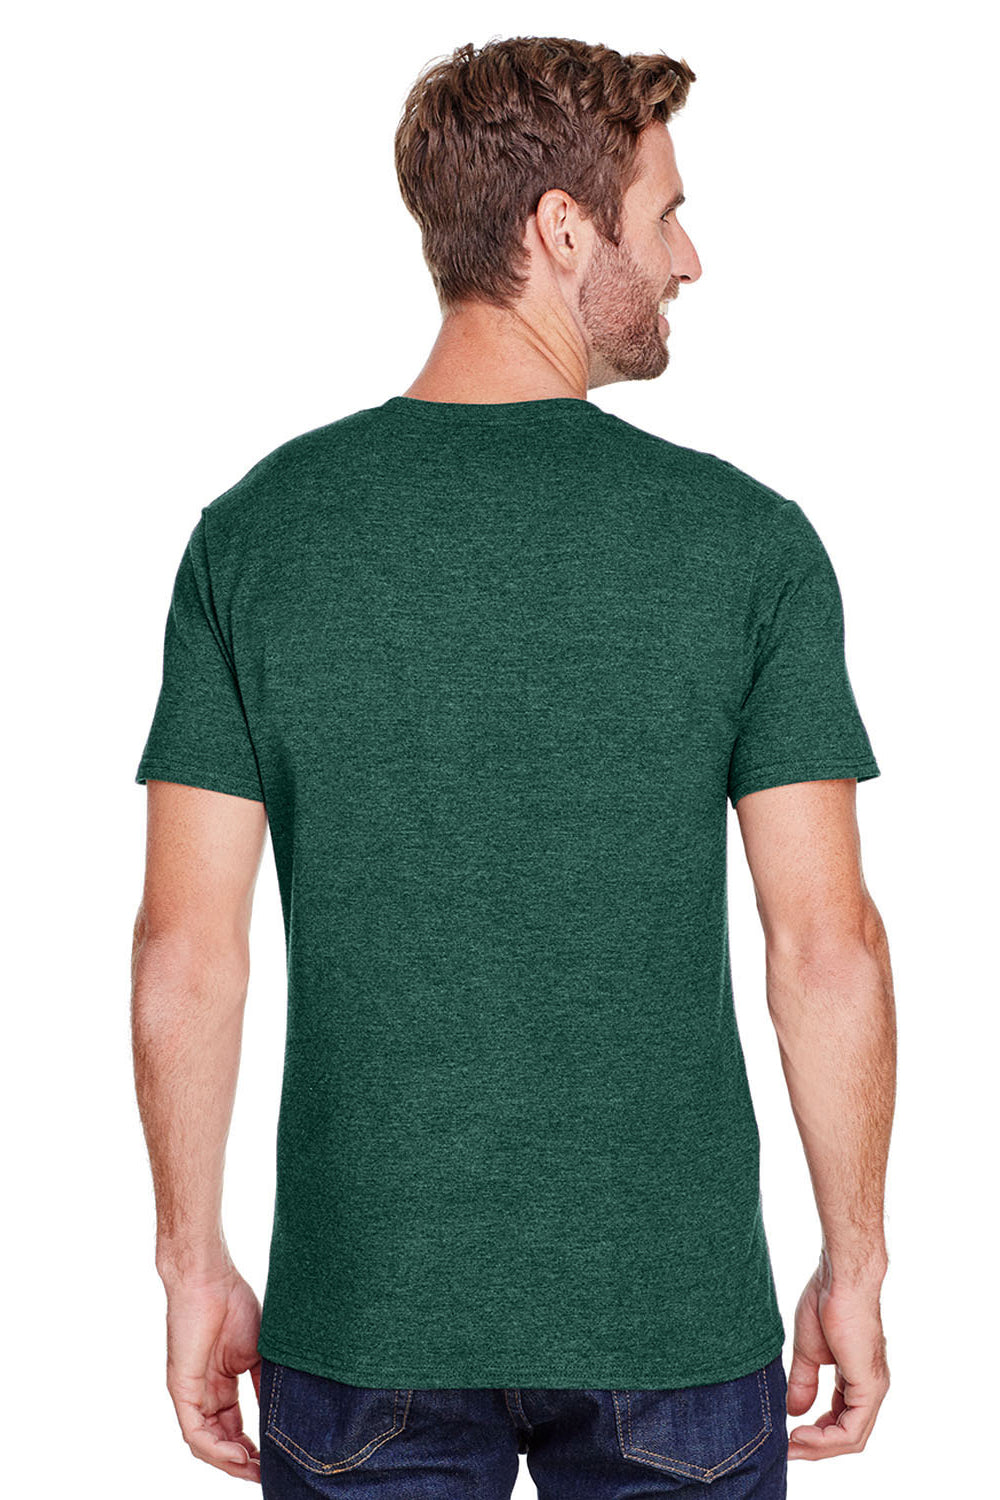 Jerzees 560MR Mens Premium Blend Short Sleeve Crewneck T-Shirt Heather Forest Green Back